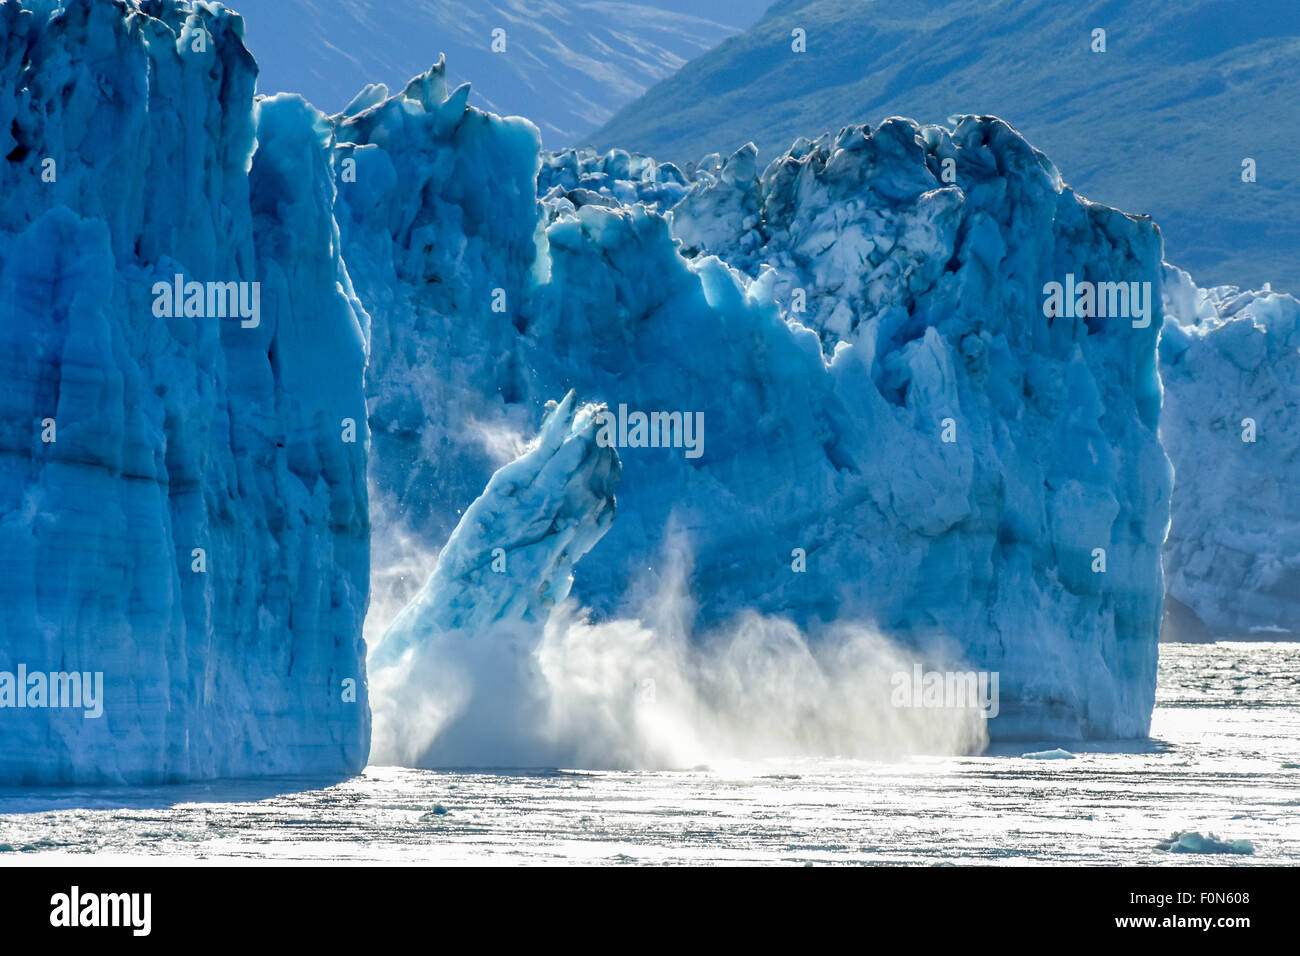 Alaska cruise - calving glacier - Hubbard - global warming & climate change - a melting iceberg calves - St. Elias Alaska - Yukon, Canada Stock Photo